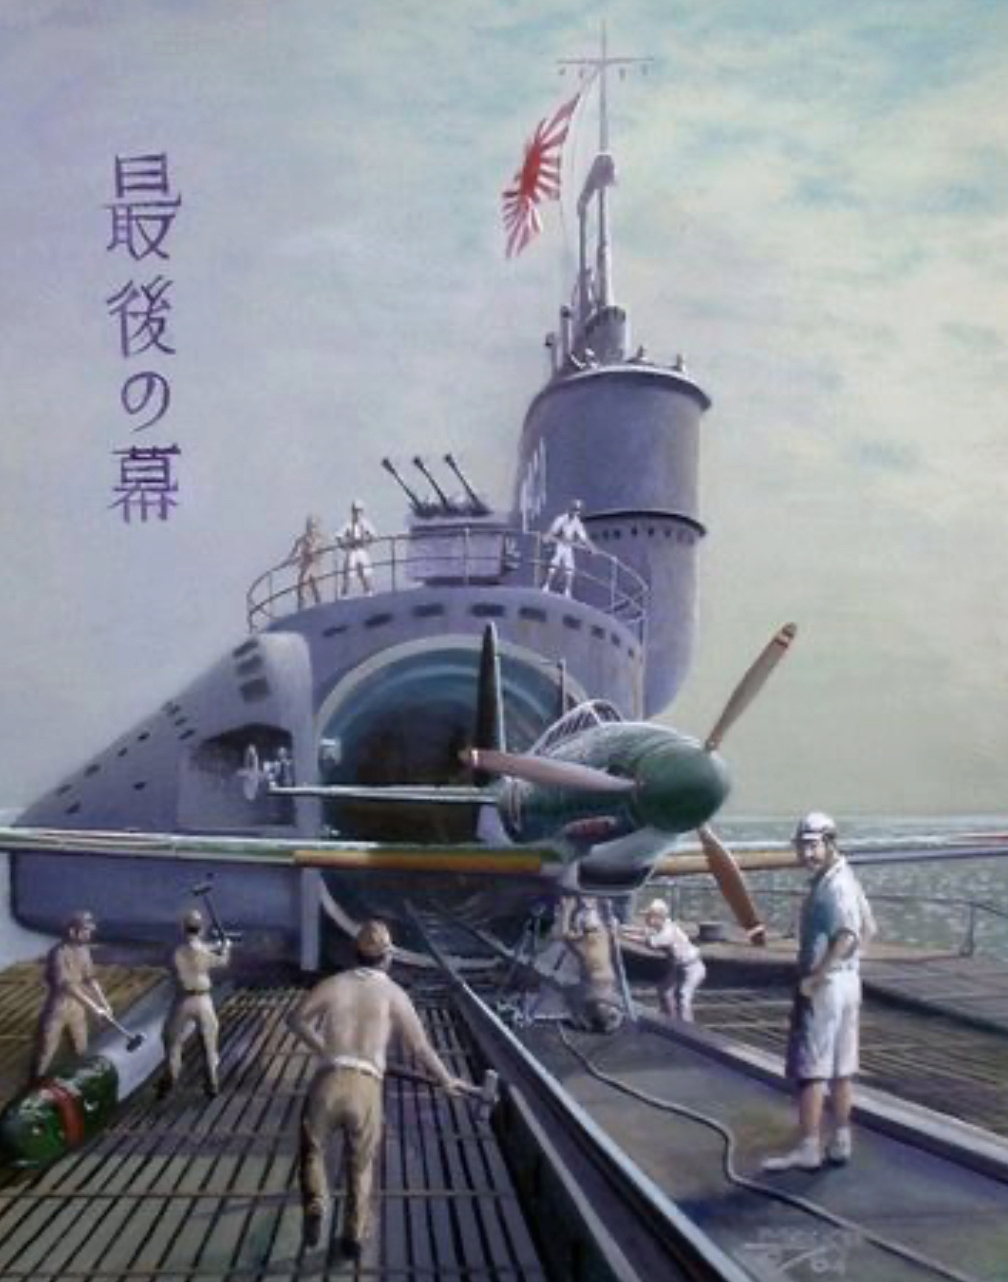  [Concours " Guerre du Pacifique 1941-1945] - Aichi M6A1 Seiran - Tamiya - 1/48 - Page 2 1f0a8610